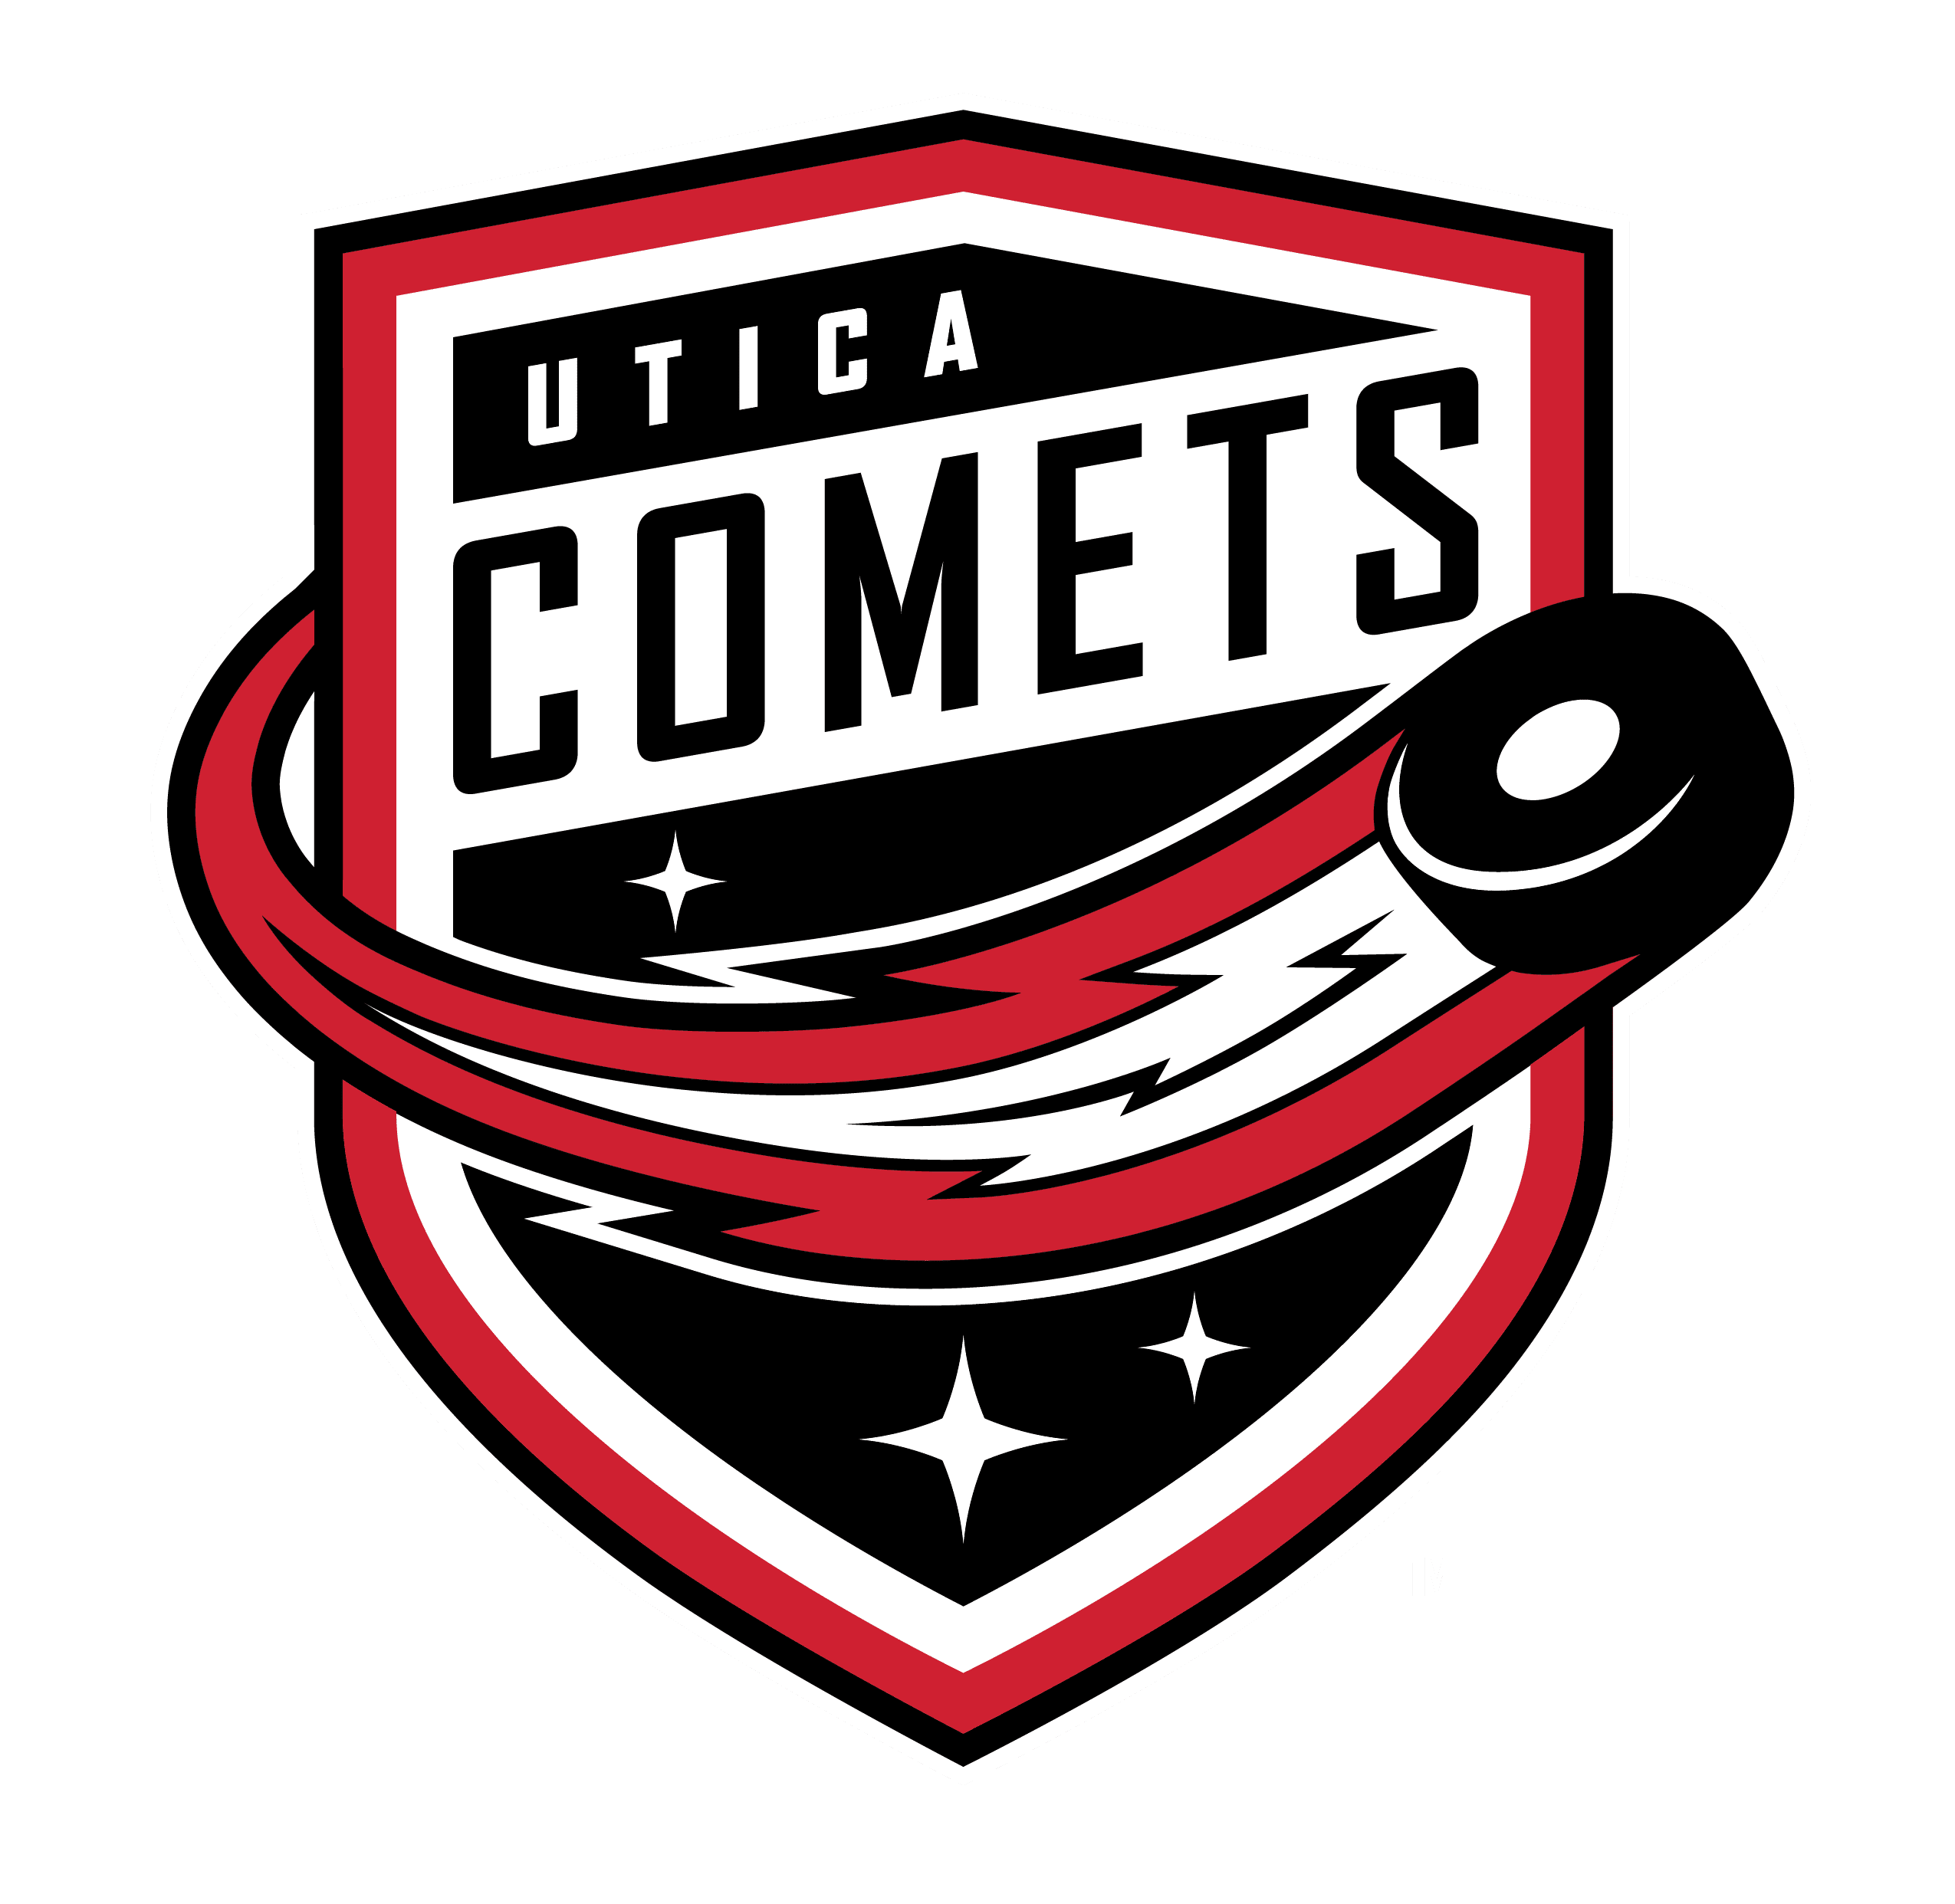 Utica Comets Tickets - StubHub